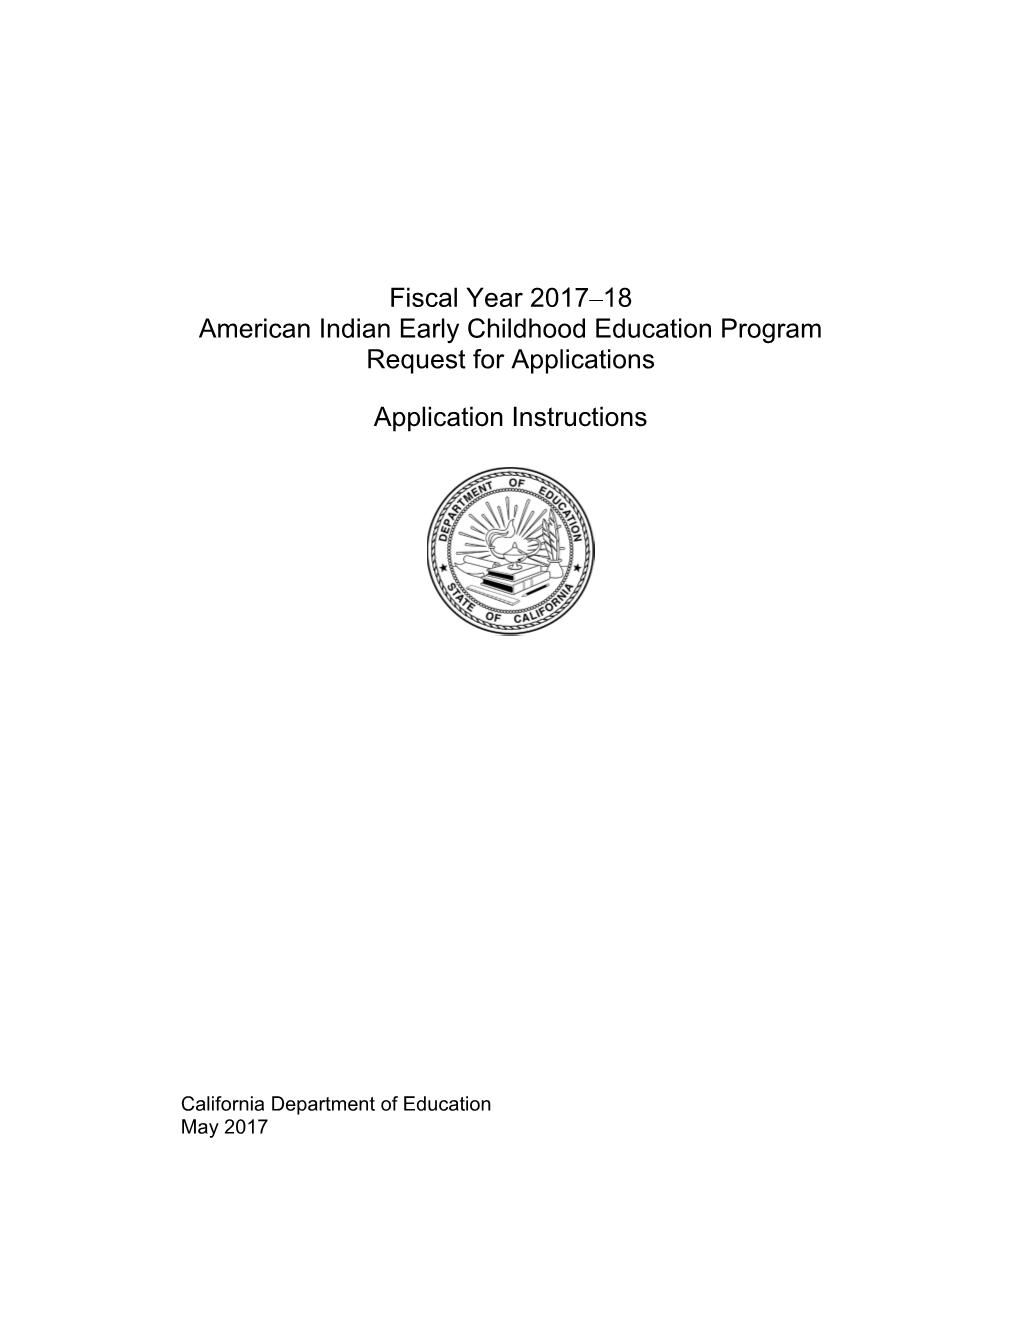 RFA-17: AIECE - Child Development (CA Dept of Education)